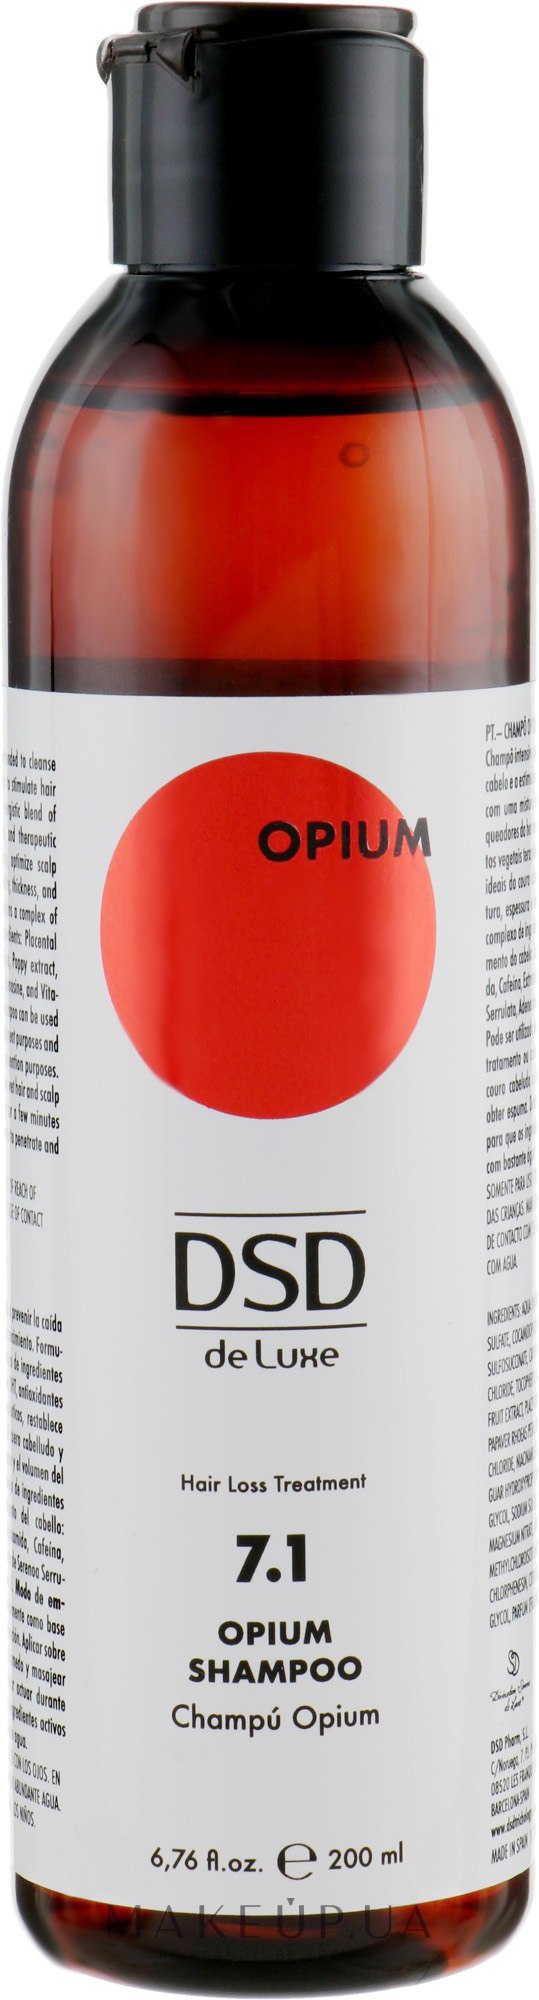 Шампунь для волосся - Simone DSD De Luxe 7.1 Opium Shampoo — фото 200ml